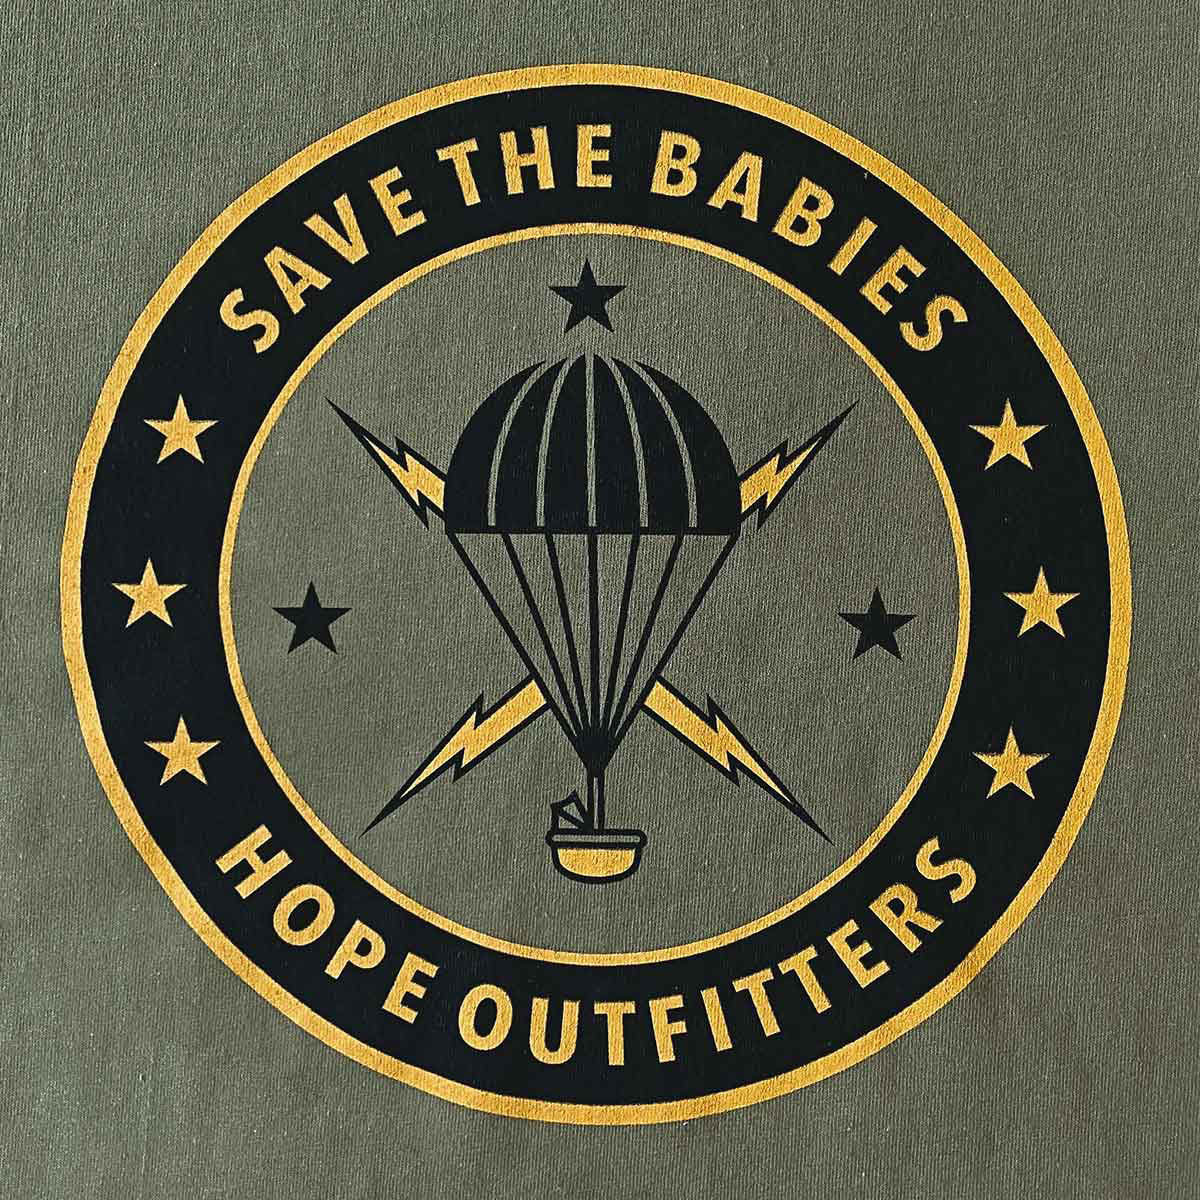 New Parachute Save The Babies Tee!